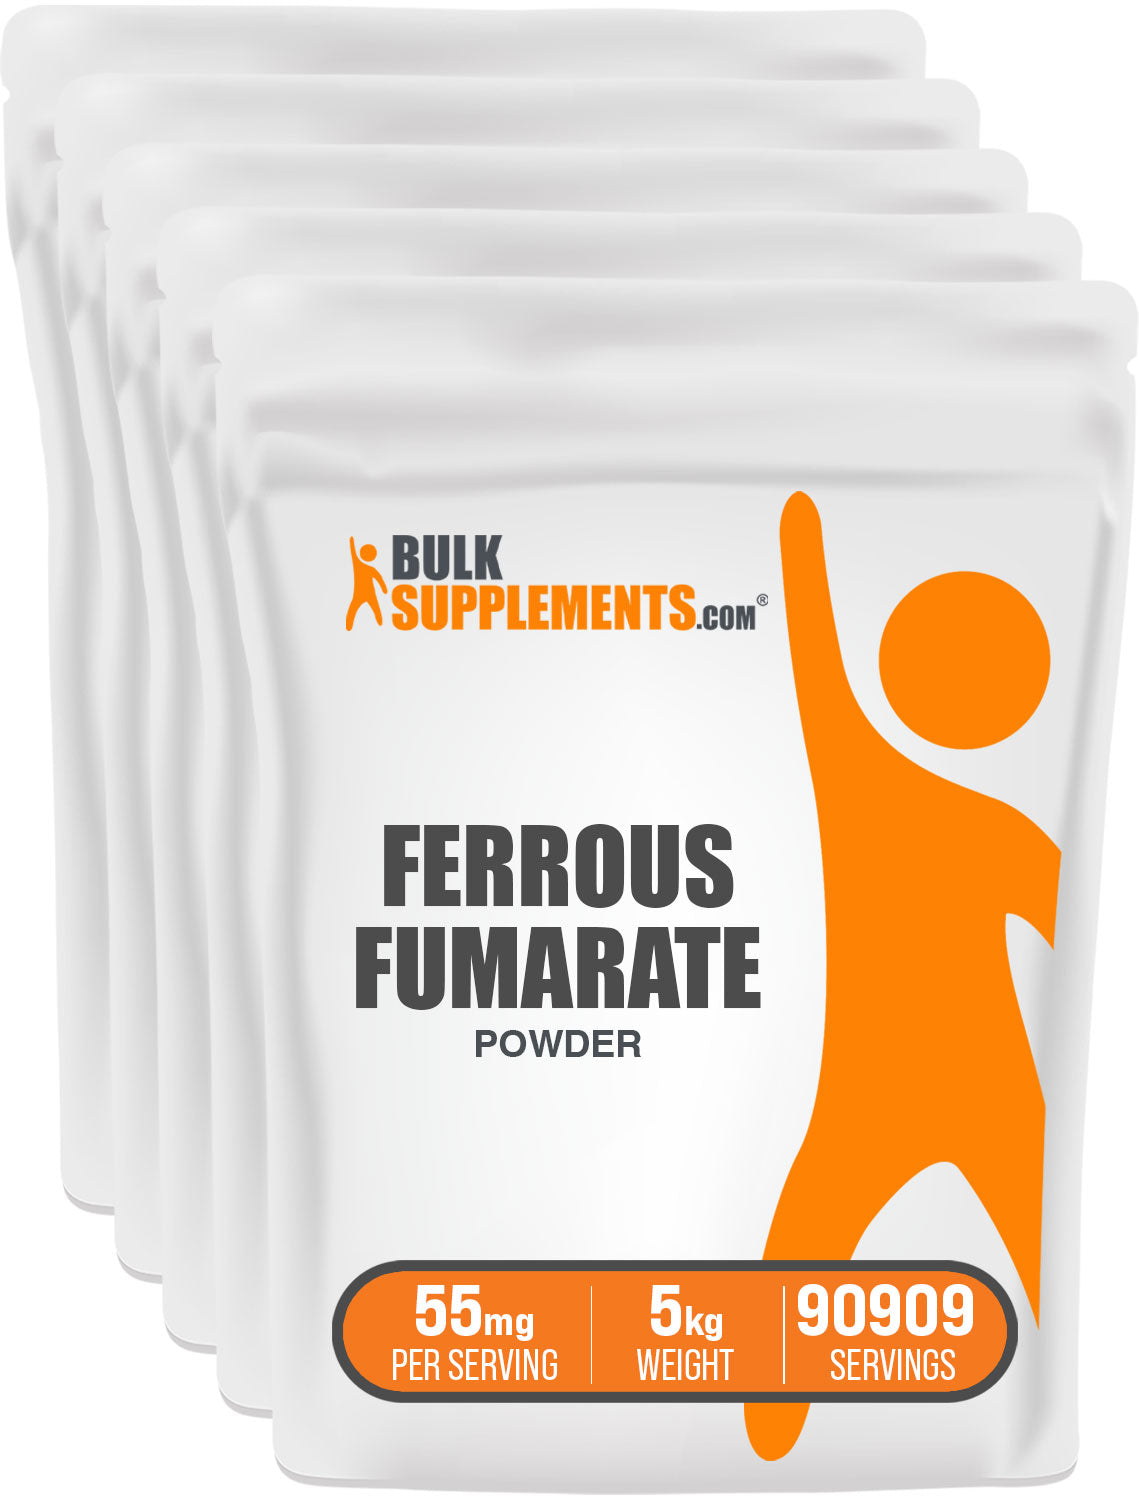 Ferrous fumarate powder 5kg bag